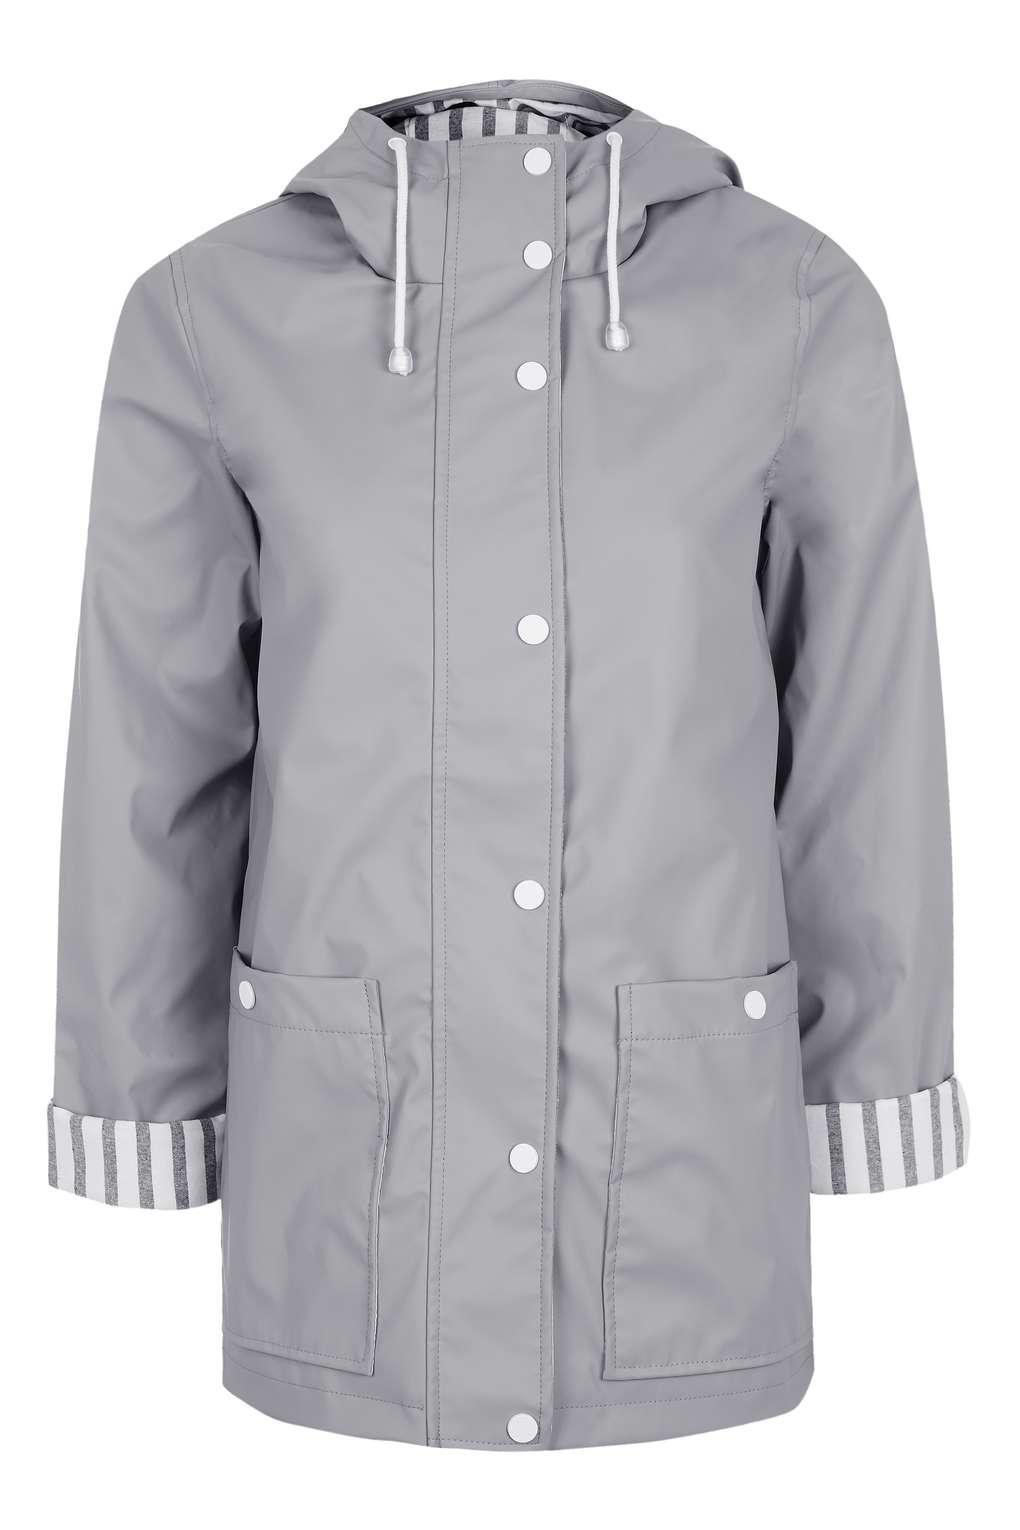 topshop hooded rain mac jacket